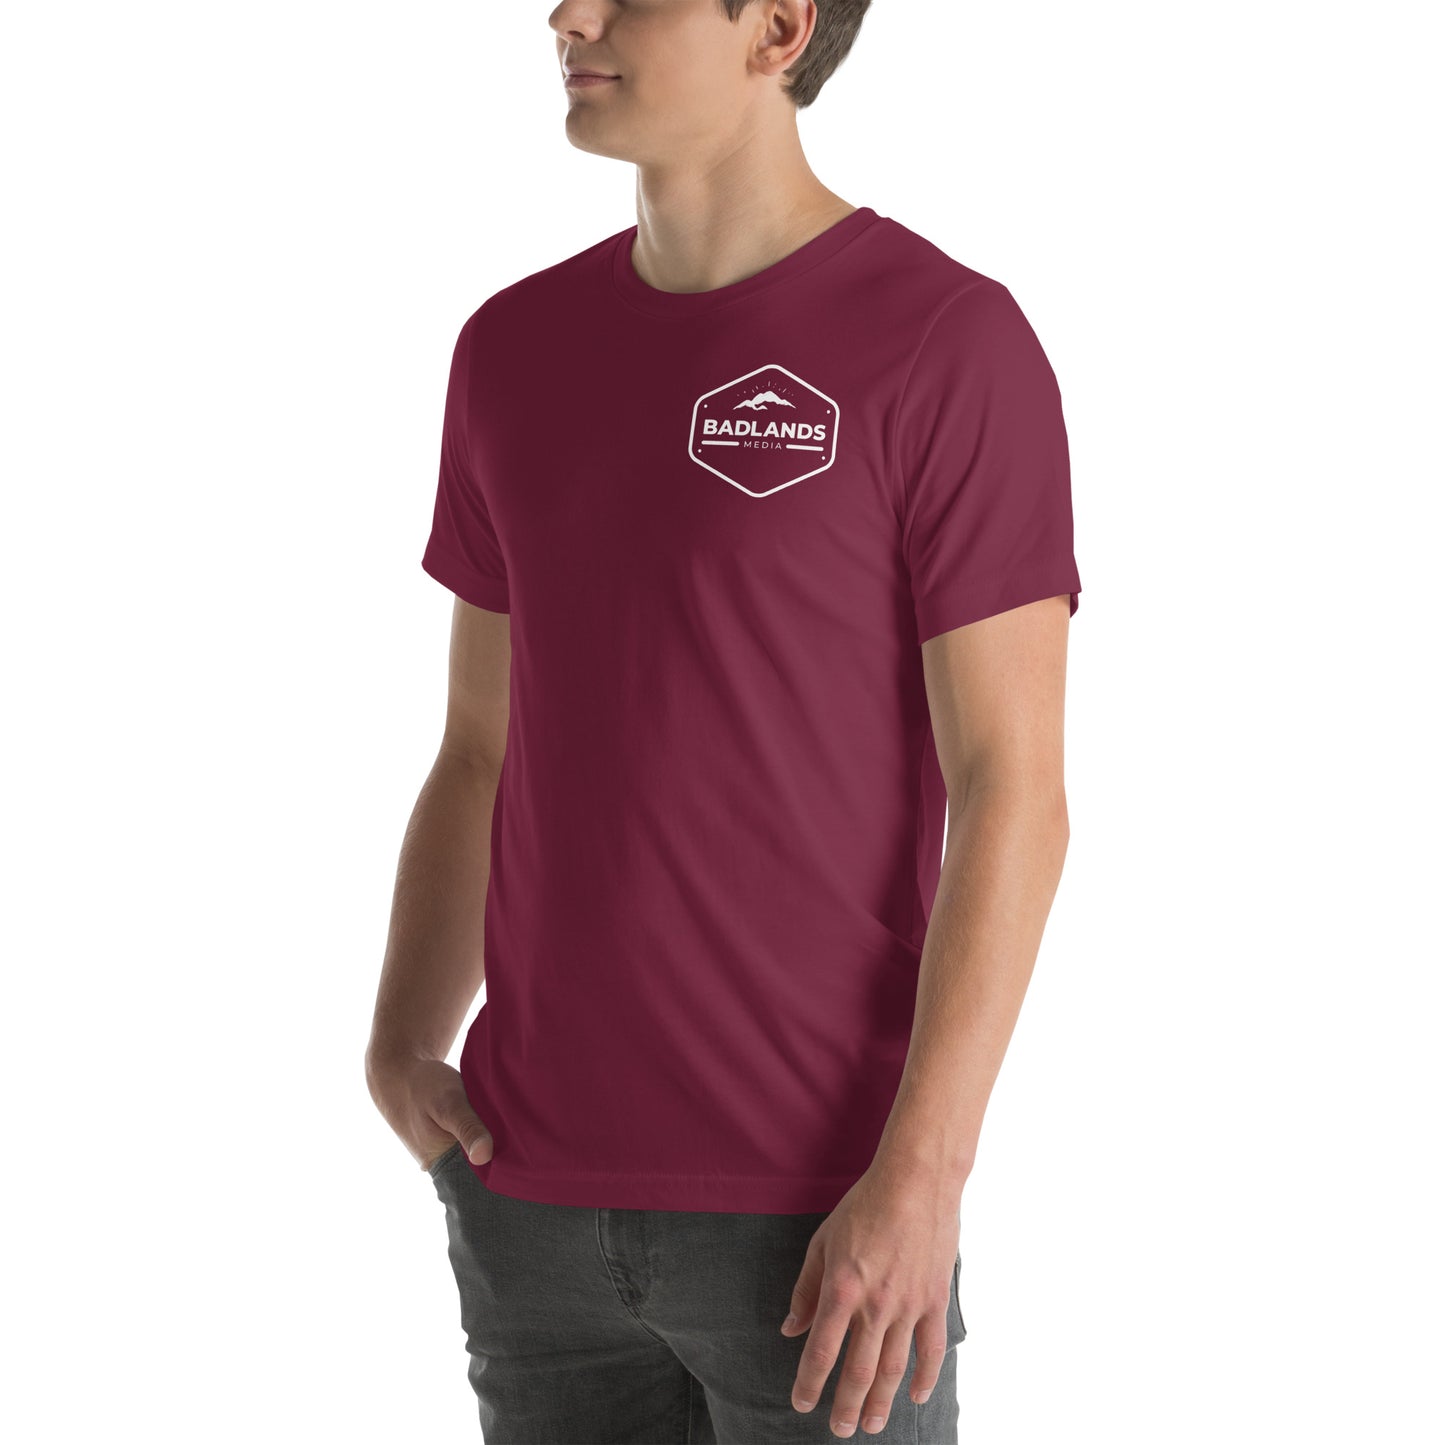 Badlands Story Hour (back print) Unisex t-shirt